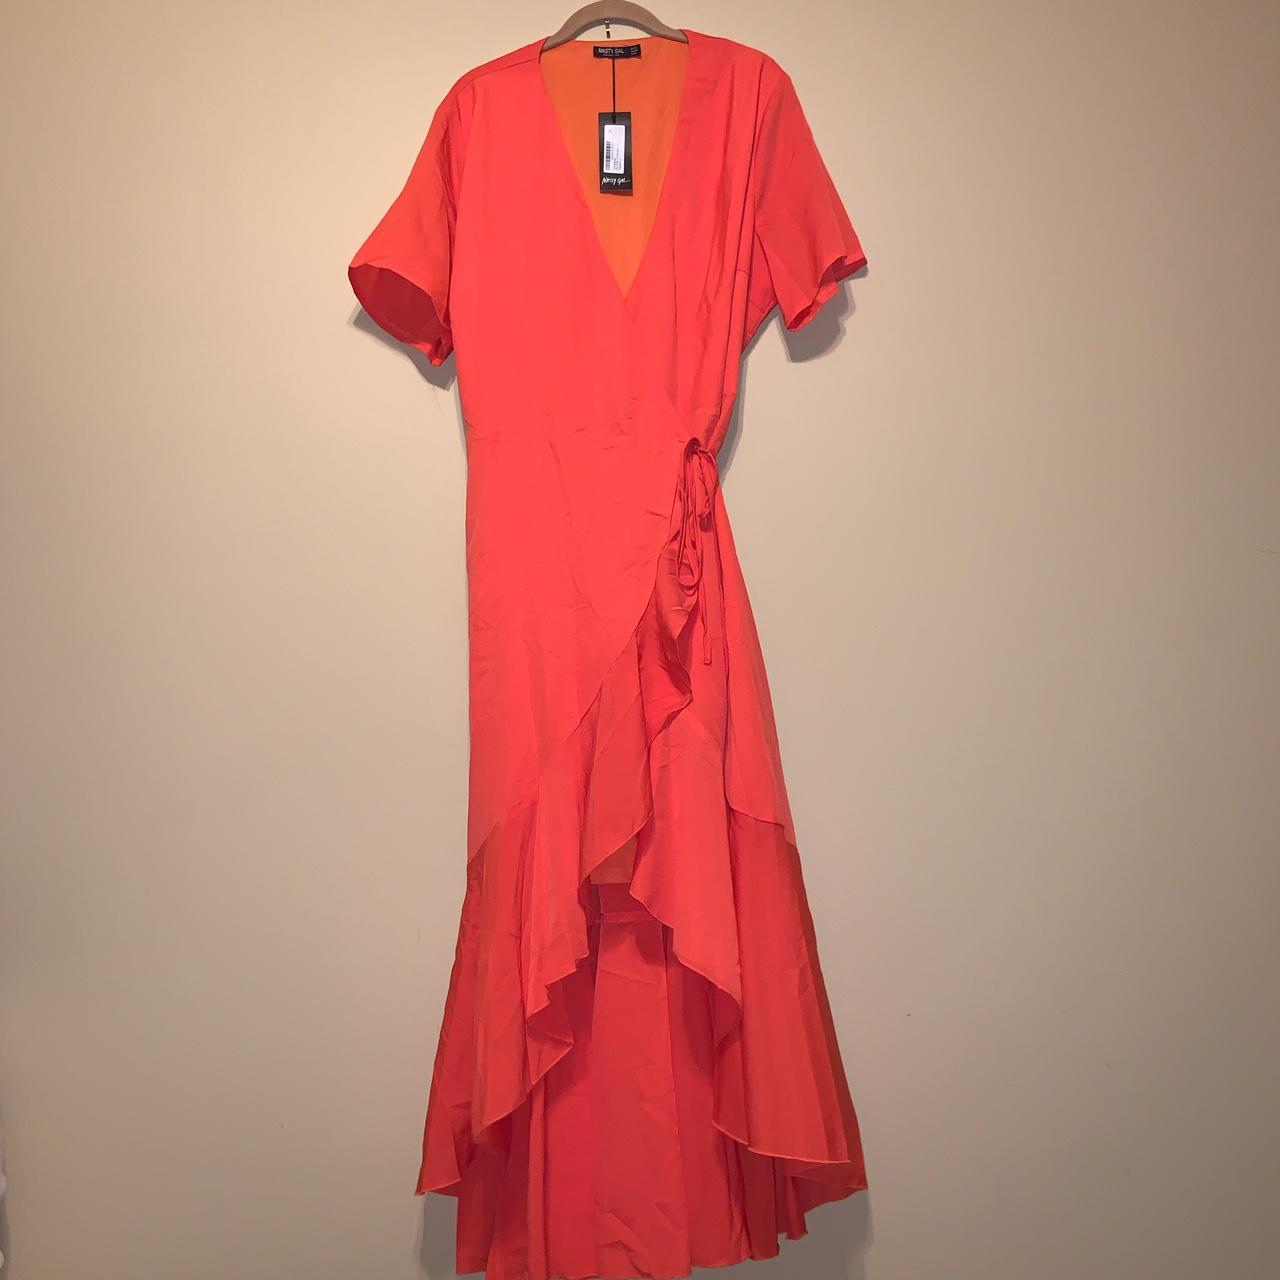 Nasty Gal Women's Orange Dress